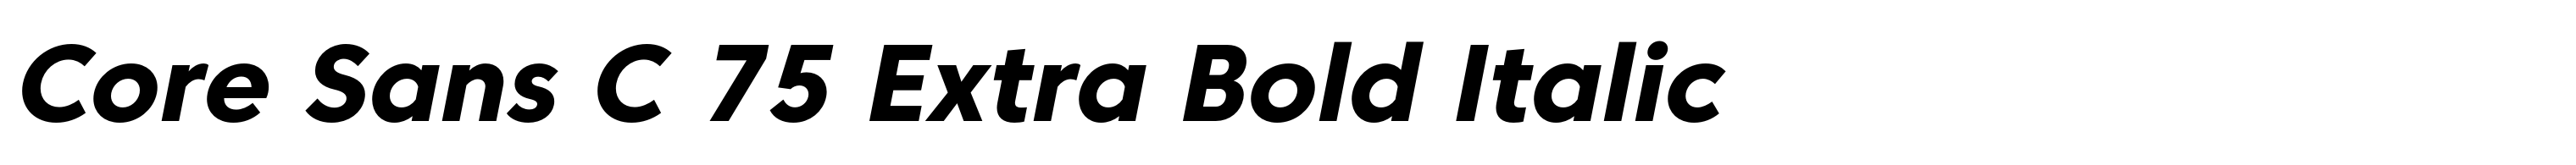 Core Sans C 75 Extra Bold Italic